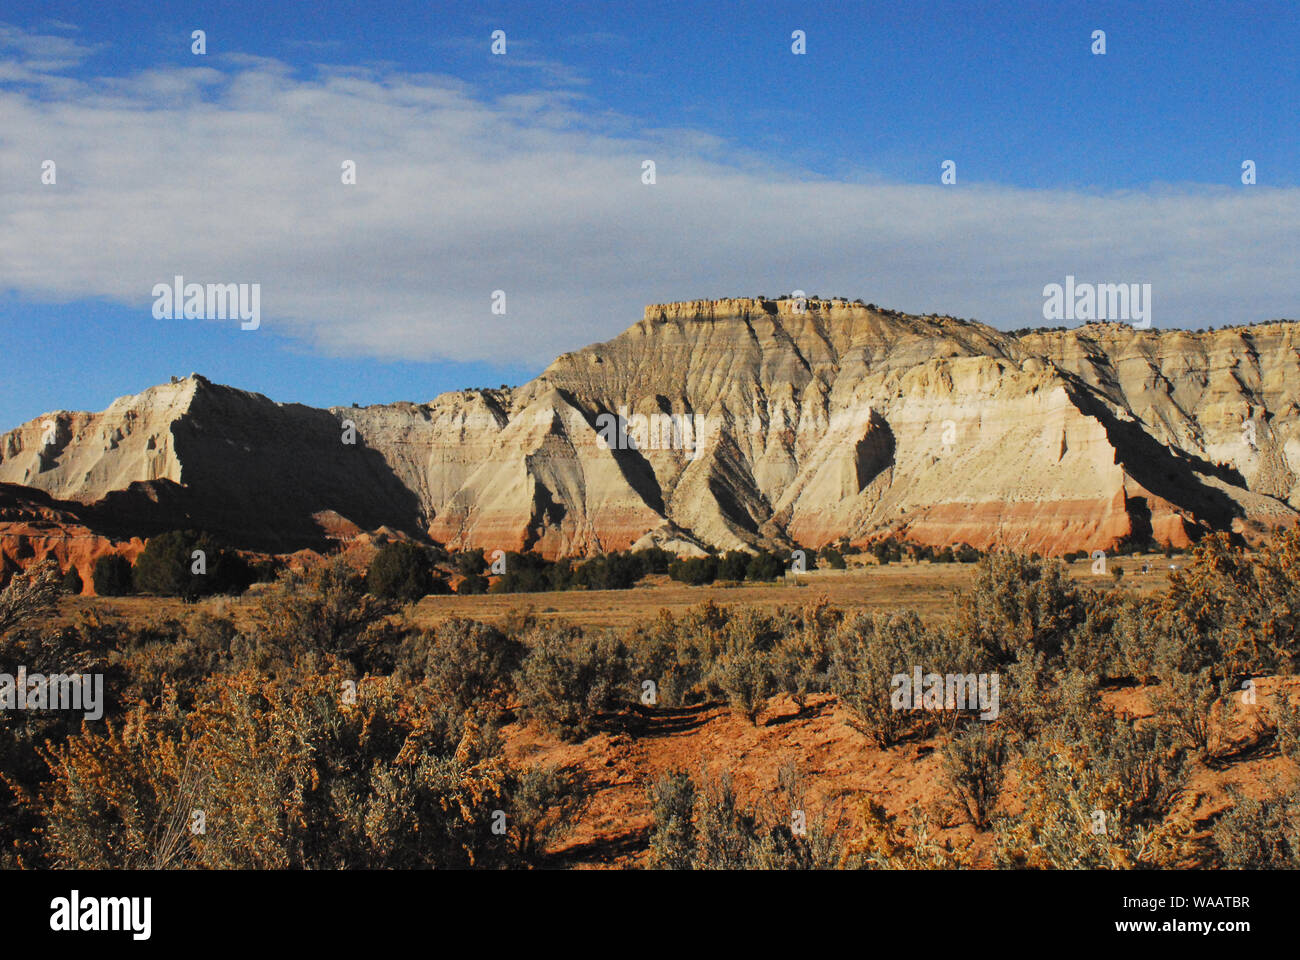 Panoramic landscape of colorful sandstone peaks in the desert of Arizona, USA. Stock Photo